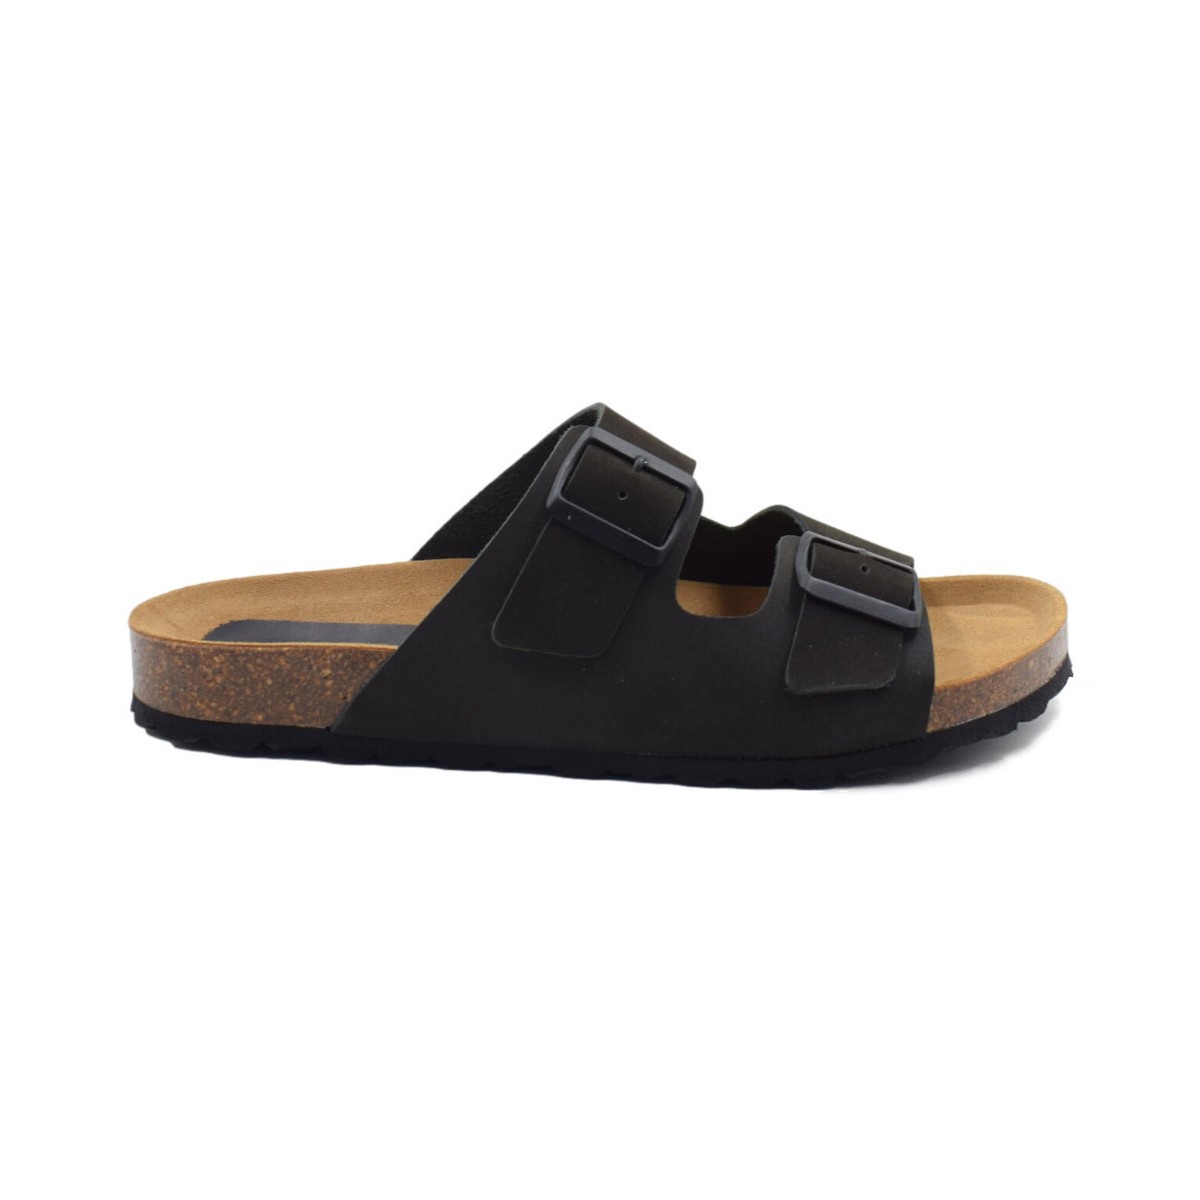 Organic black eco-friendly leather sandals by Biocomfort